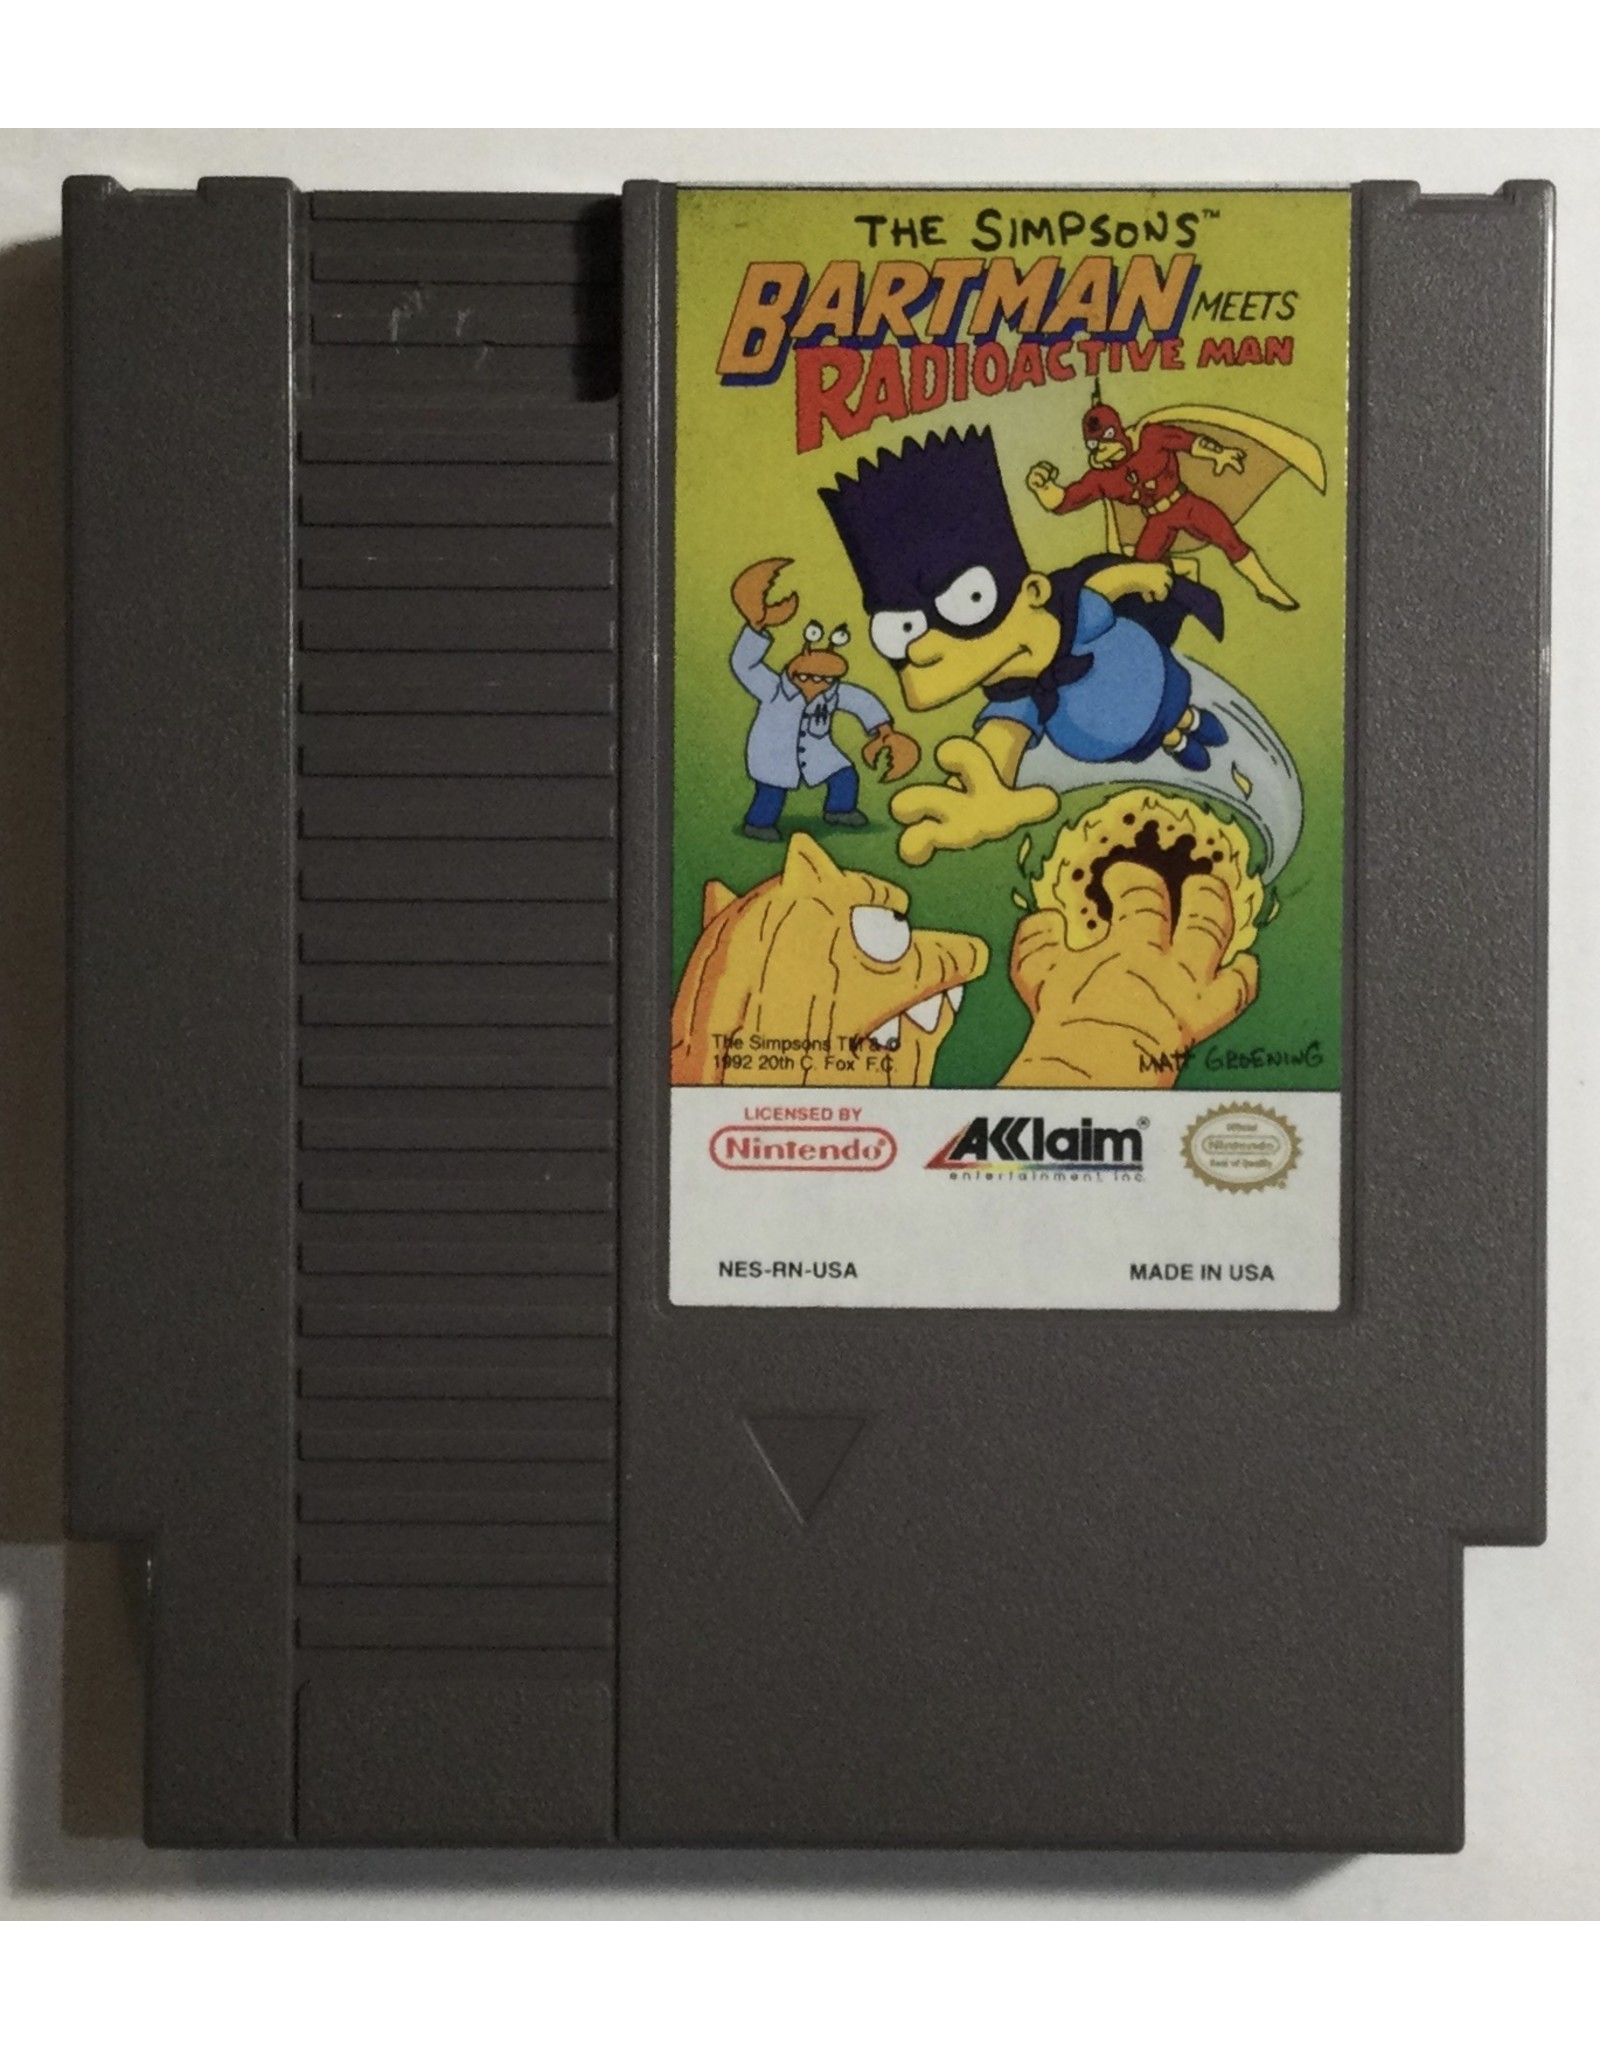 ACCLAIM The Simpsons Bartman Meets Radioactive Man for Nintendo Entertainment System (NES)